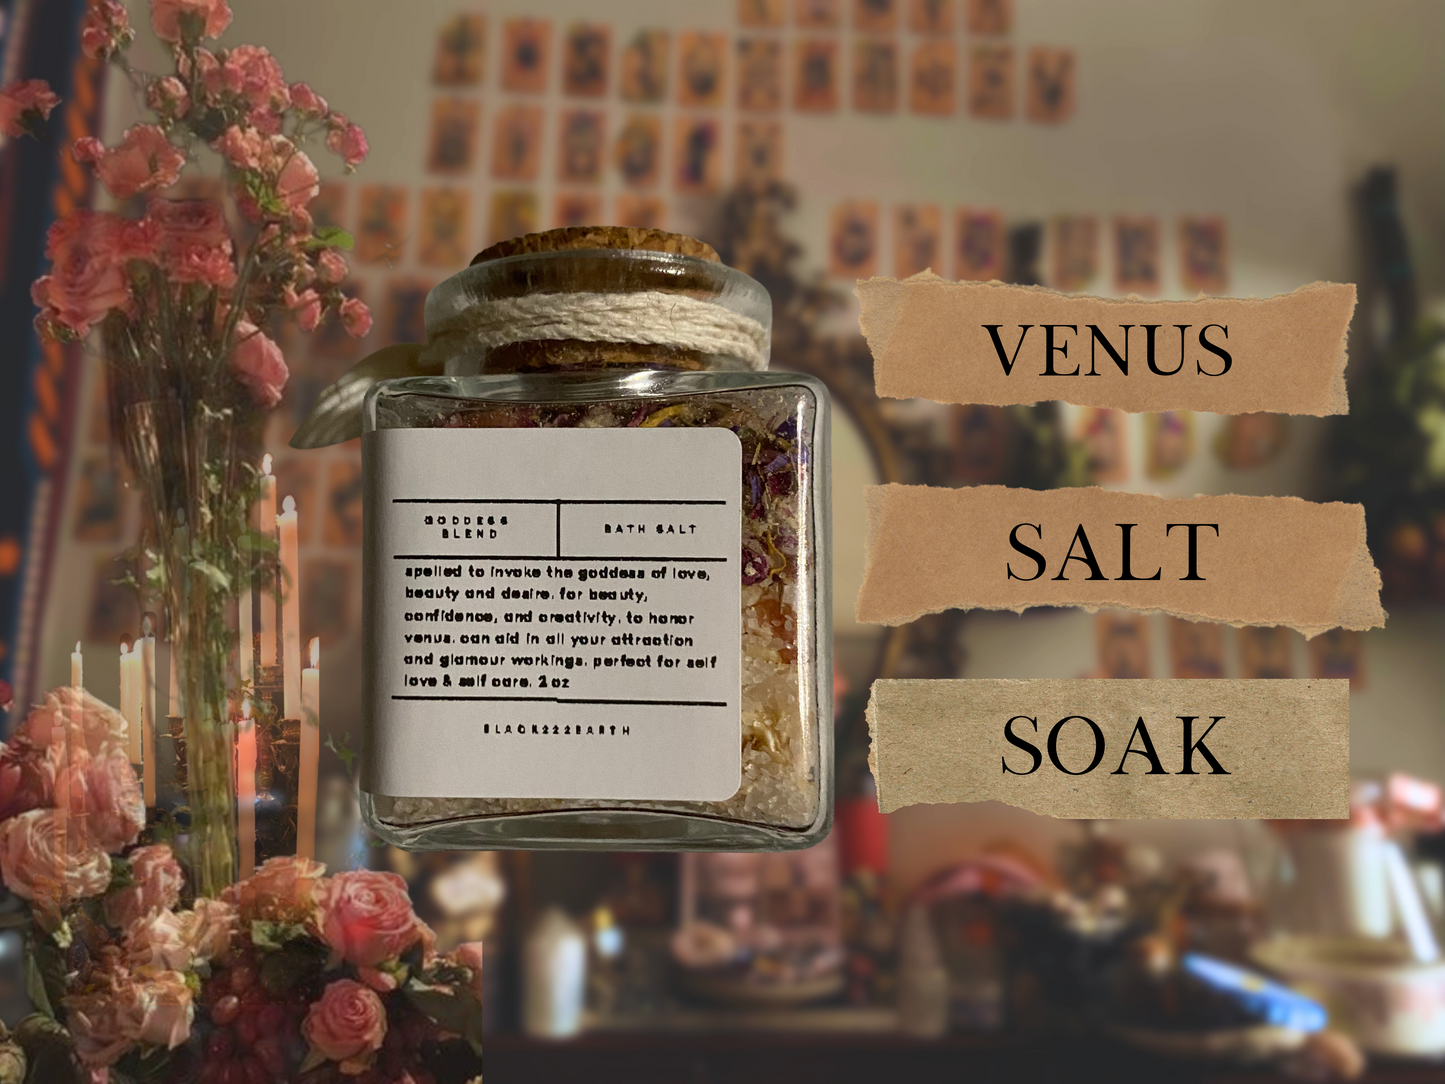 spelled salt soak(s)